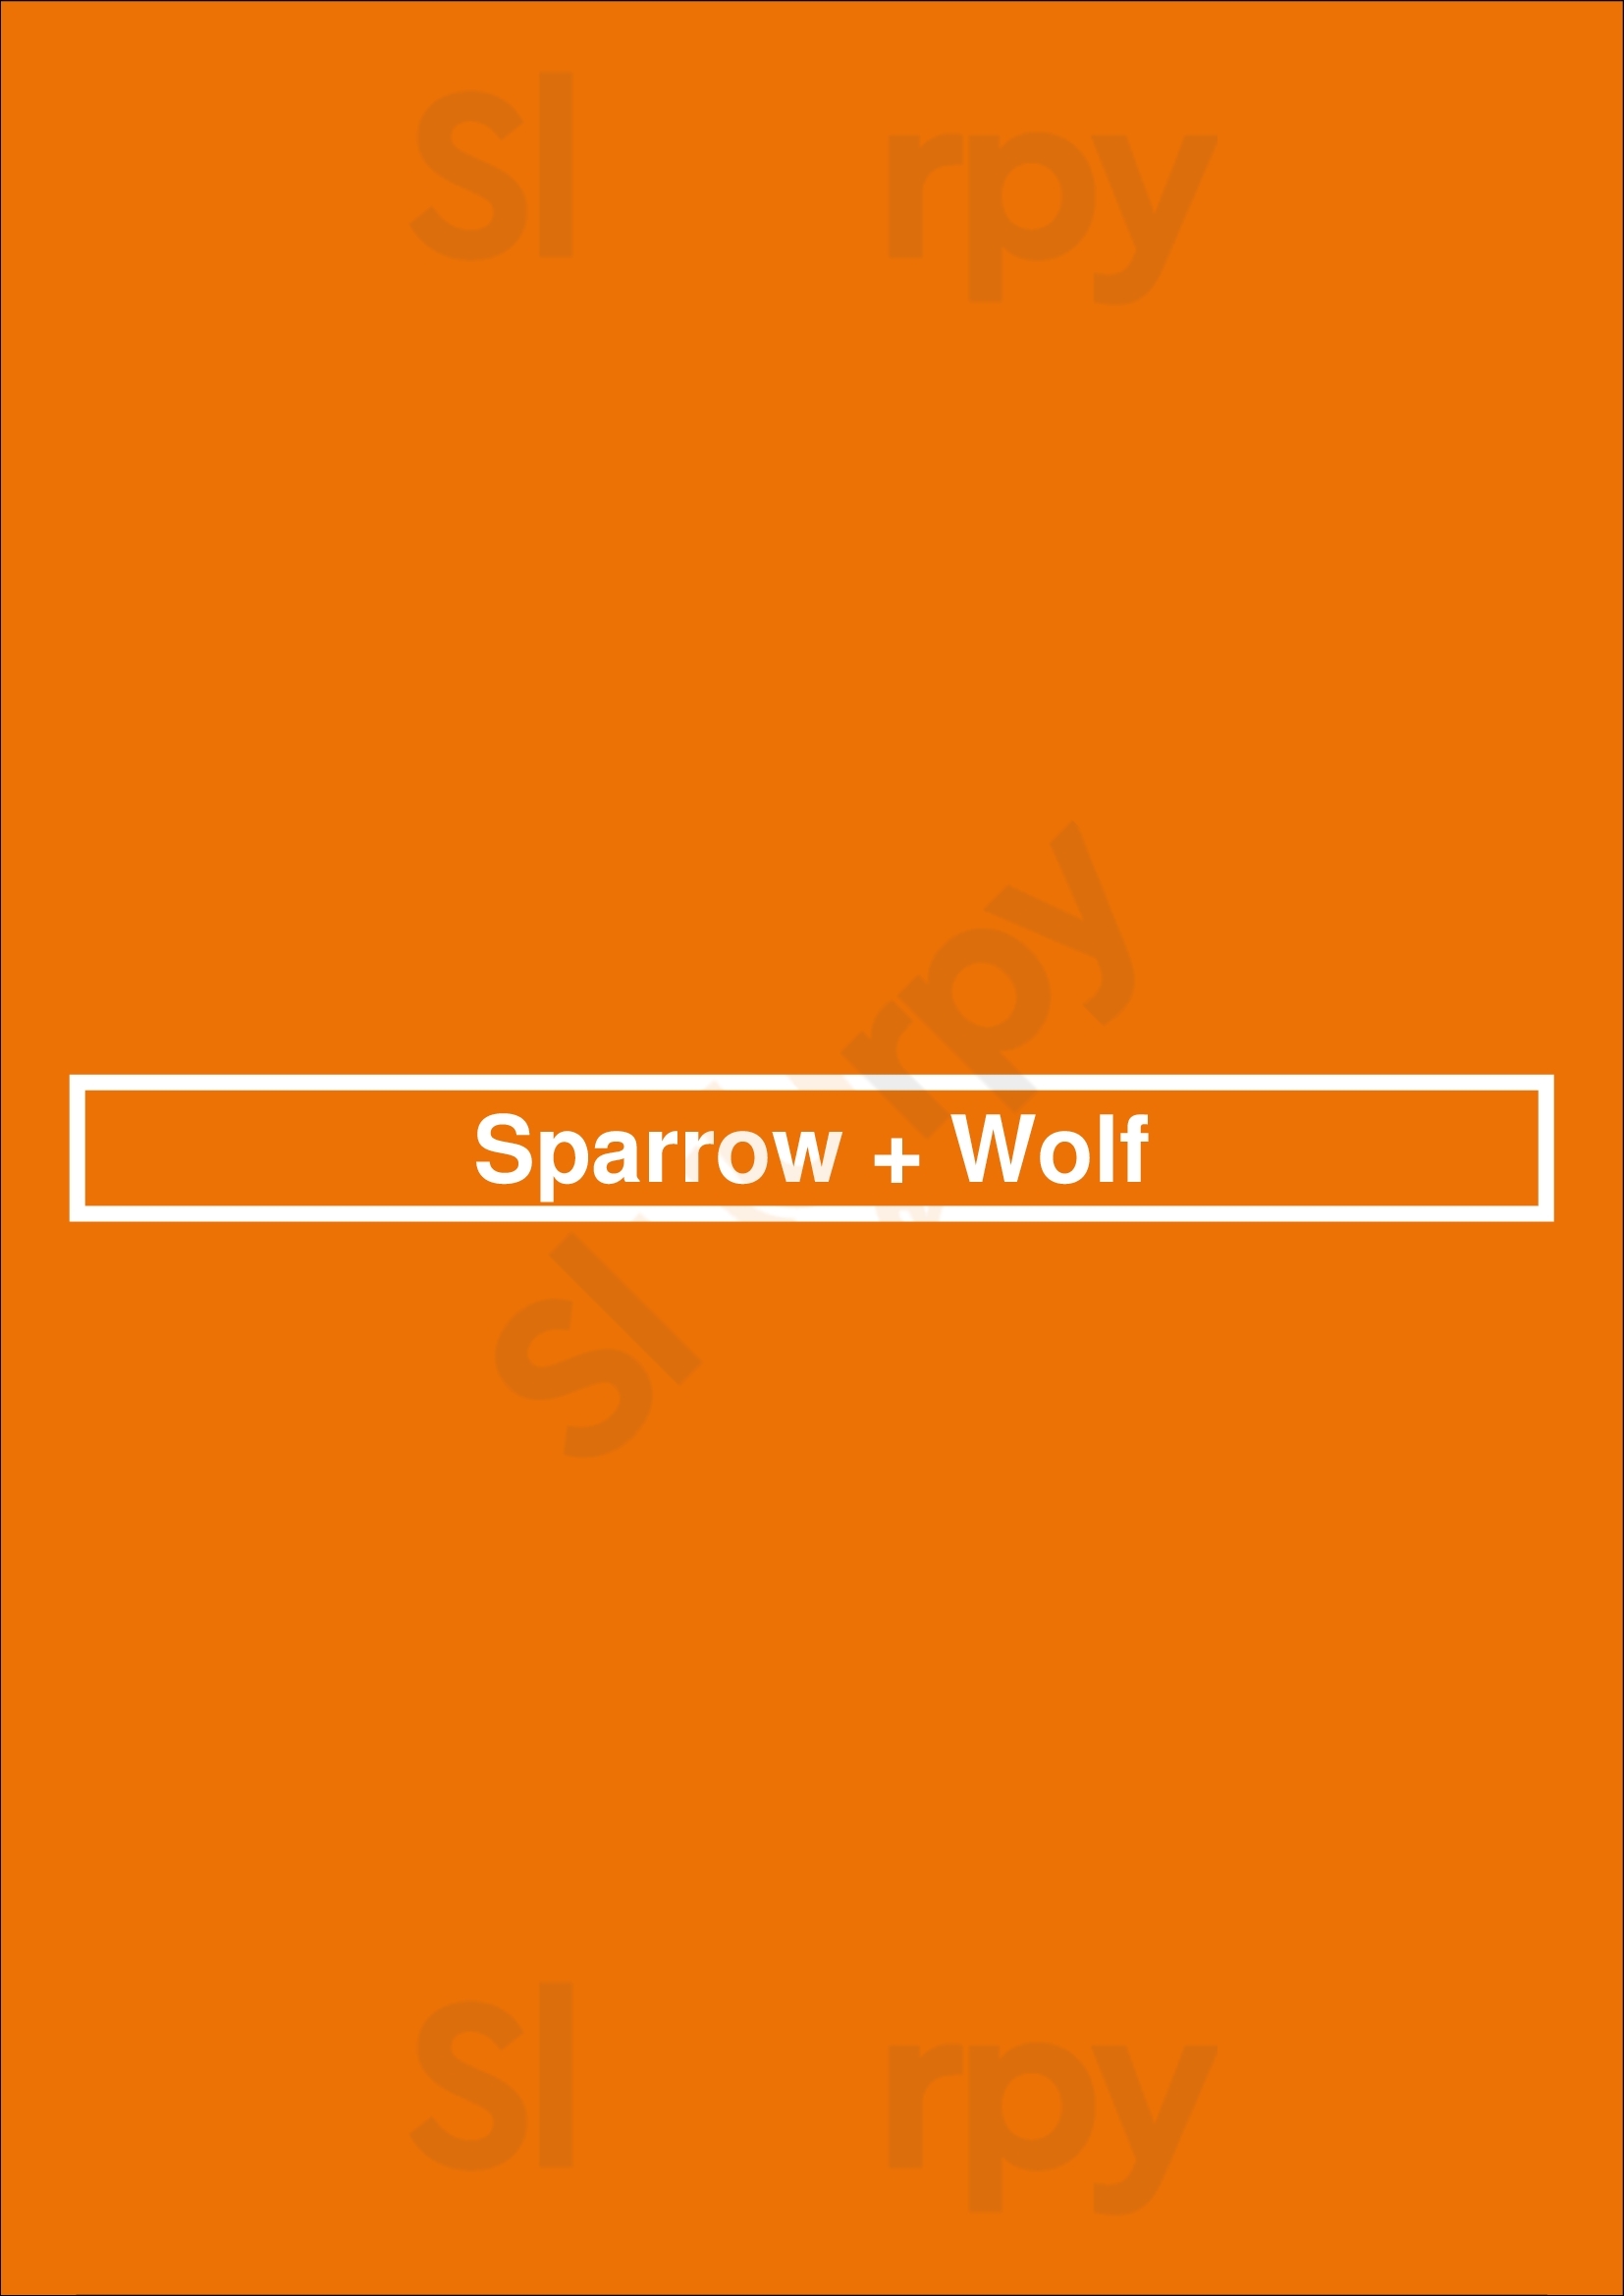 Sparrow + Wolf Las Vegas Menu - 1